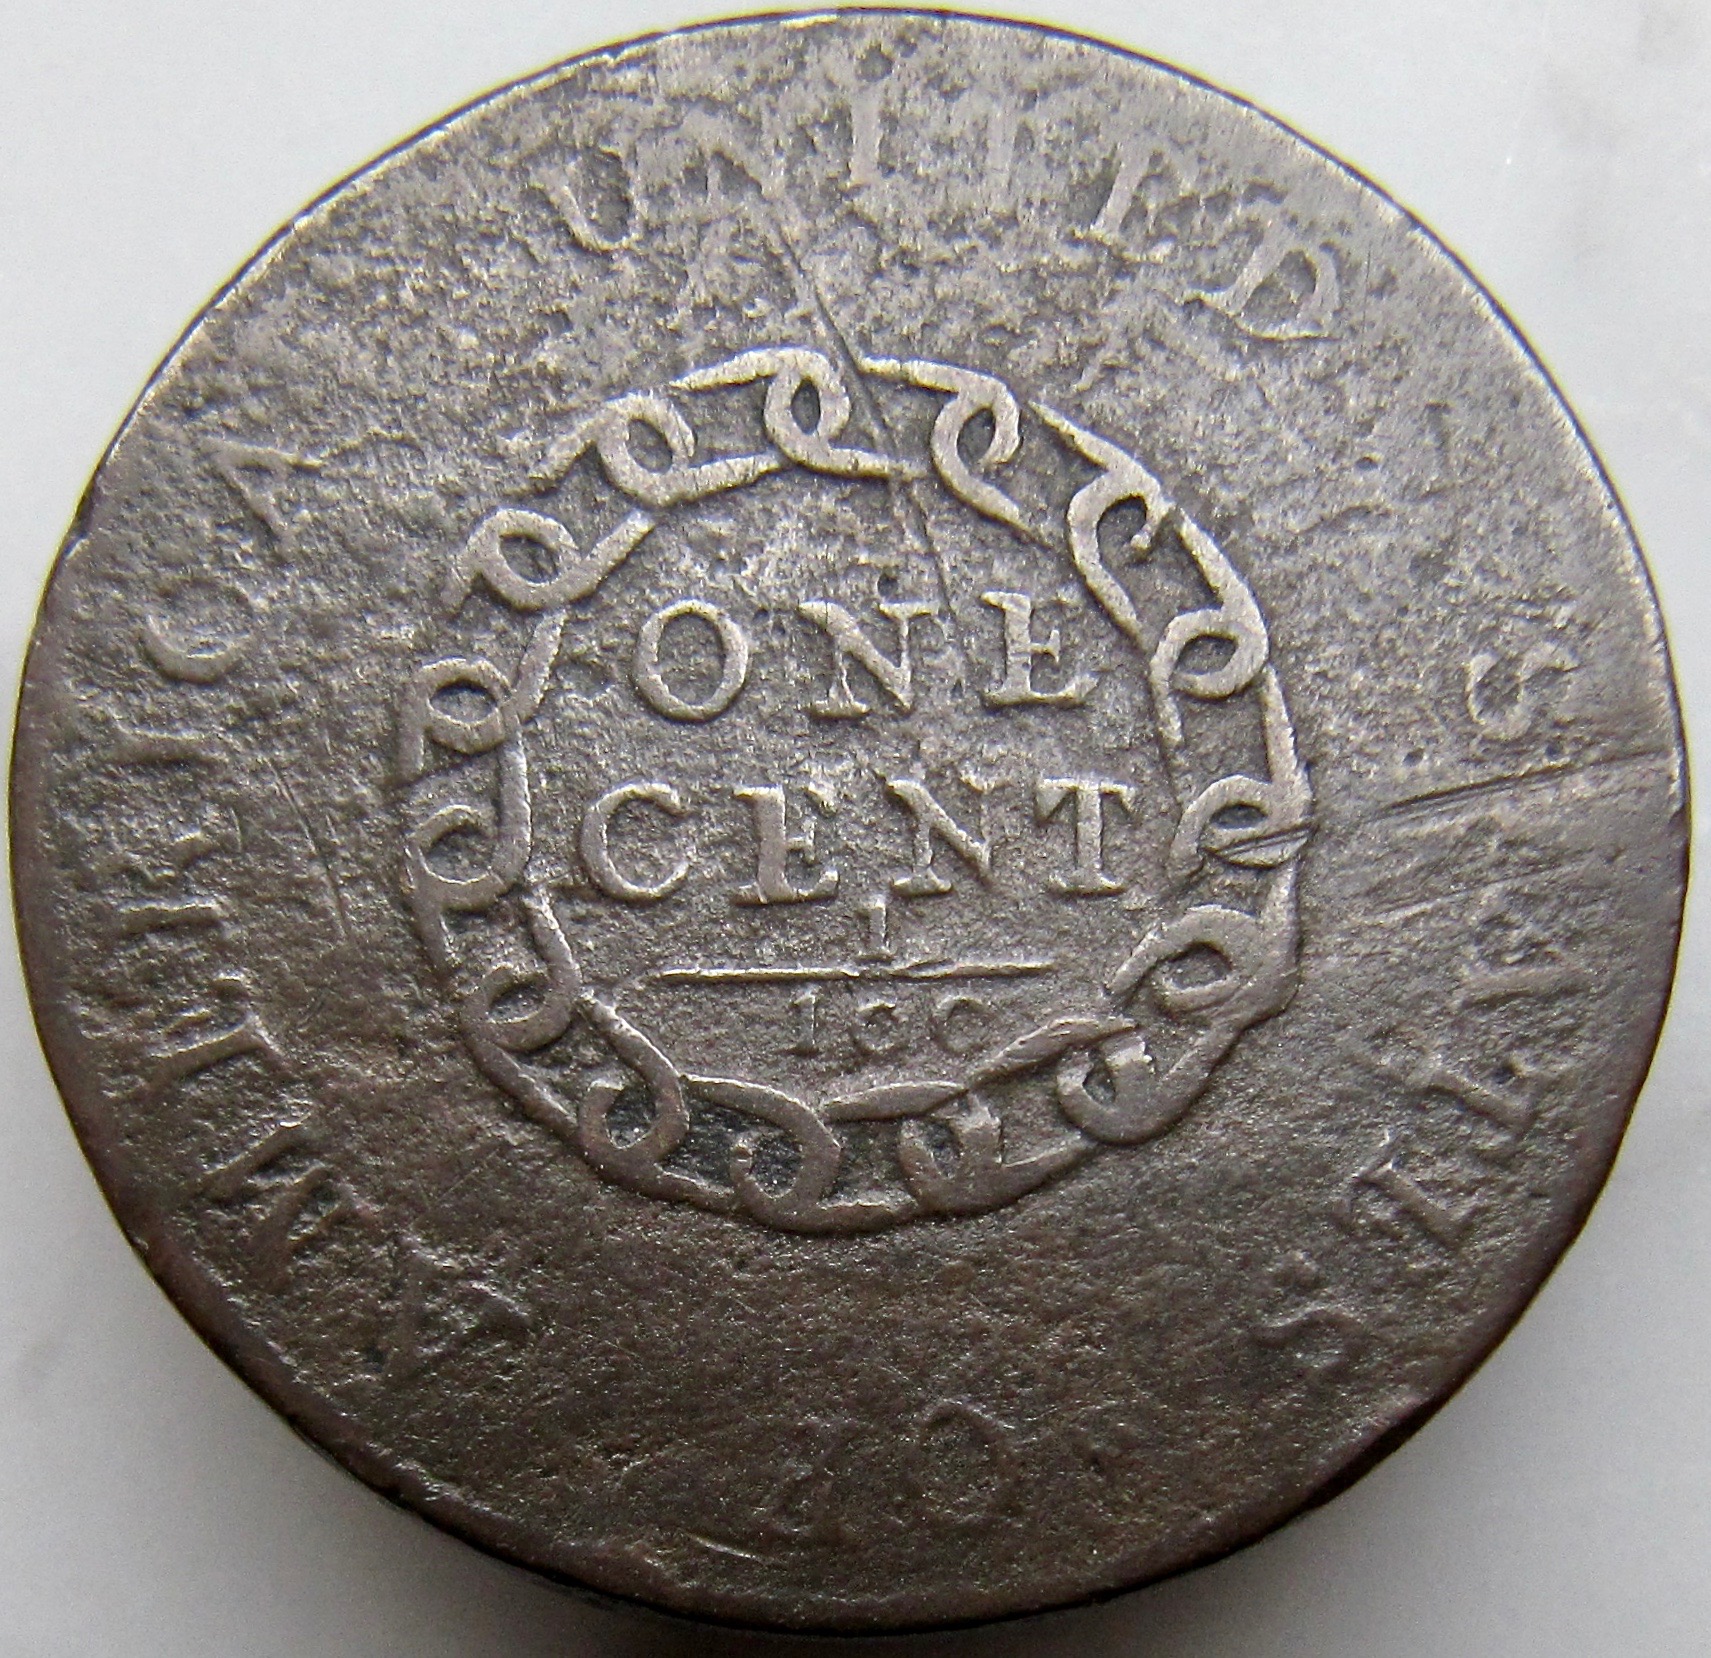 1793 Chain cent REV2 N quite good pic - 1.jpg